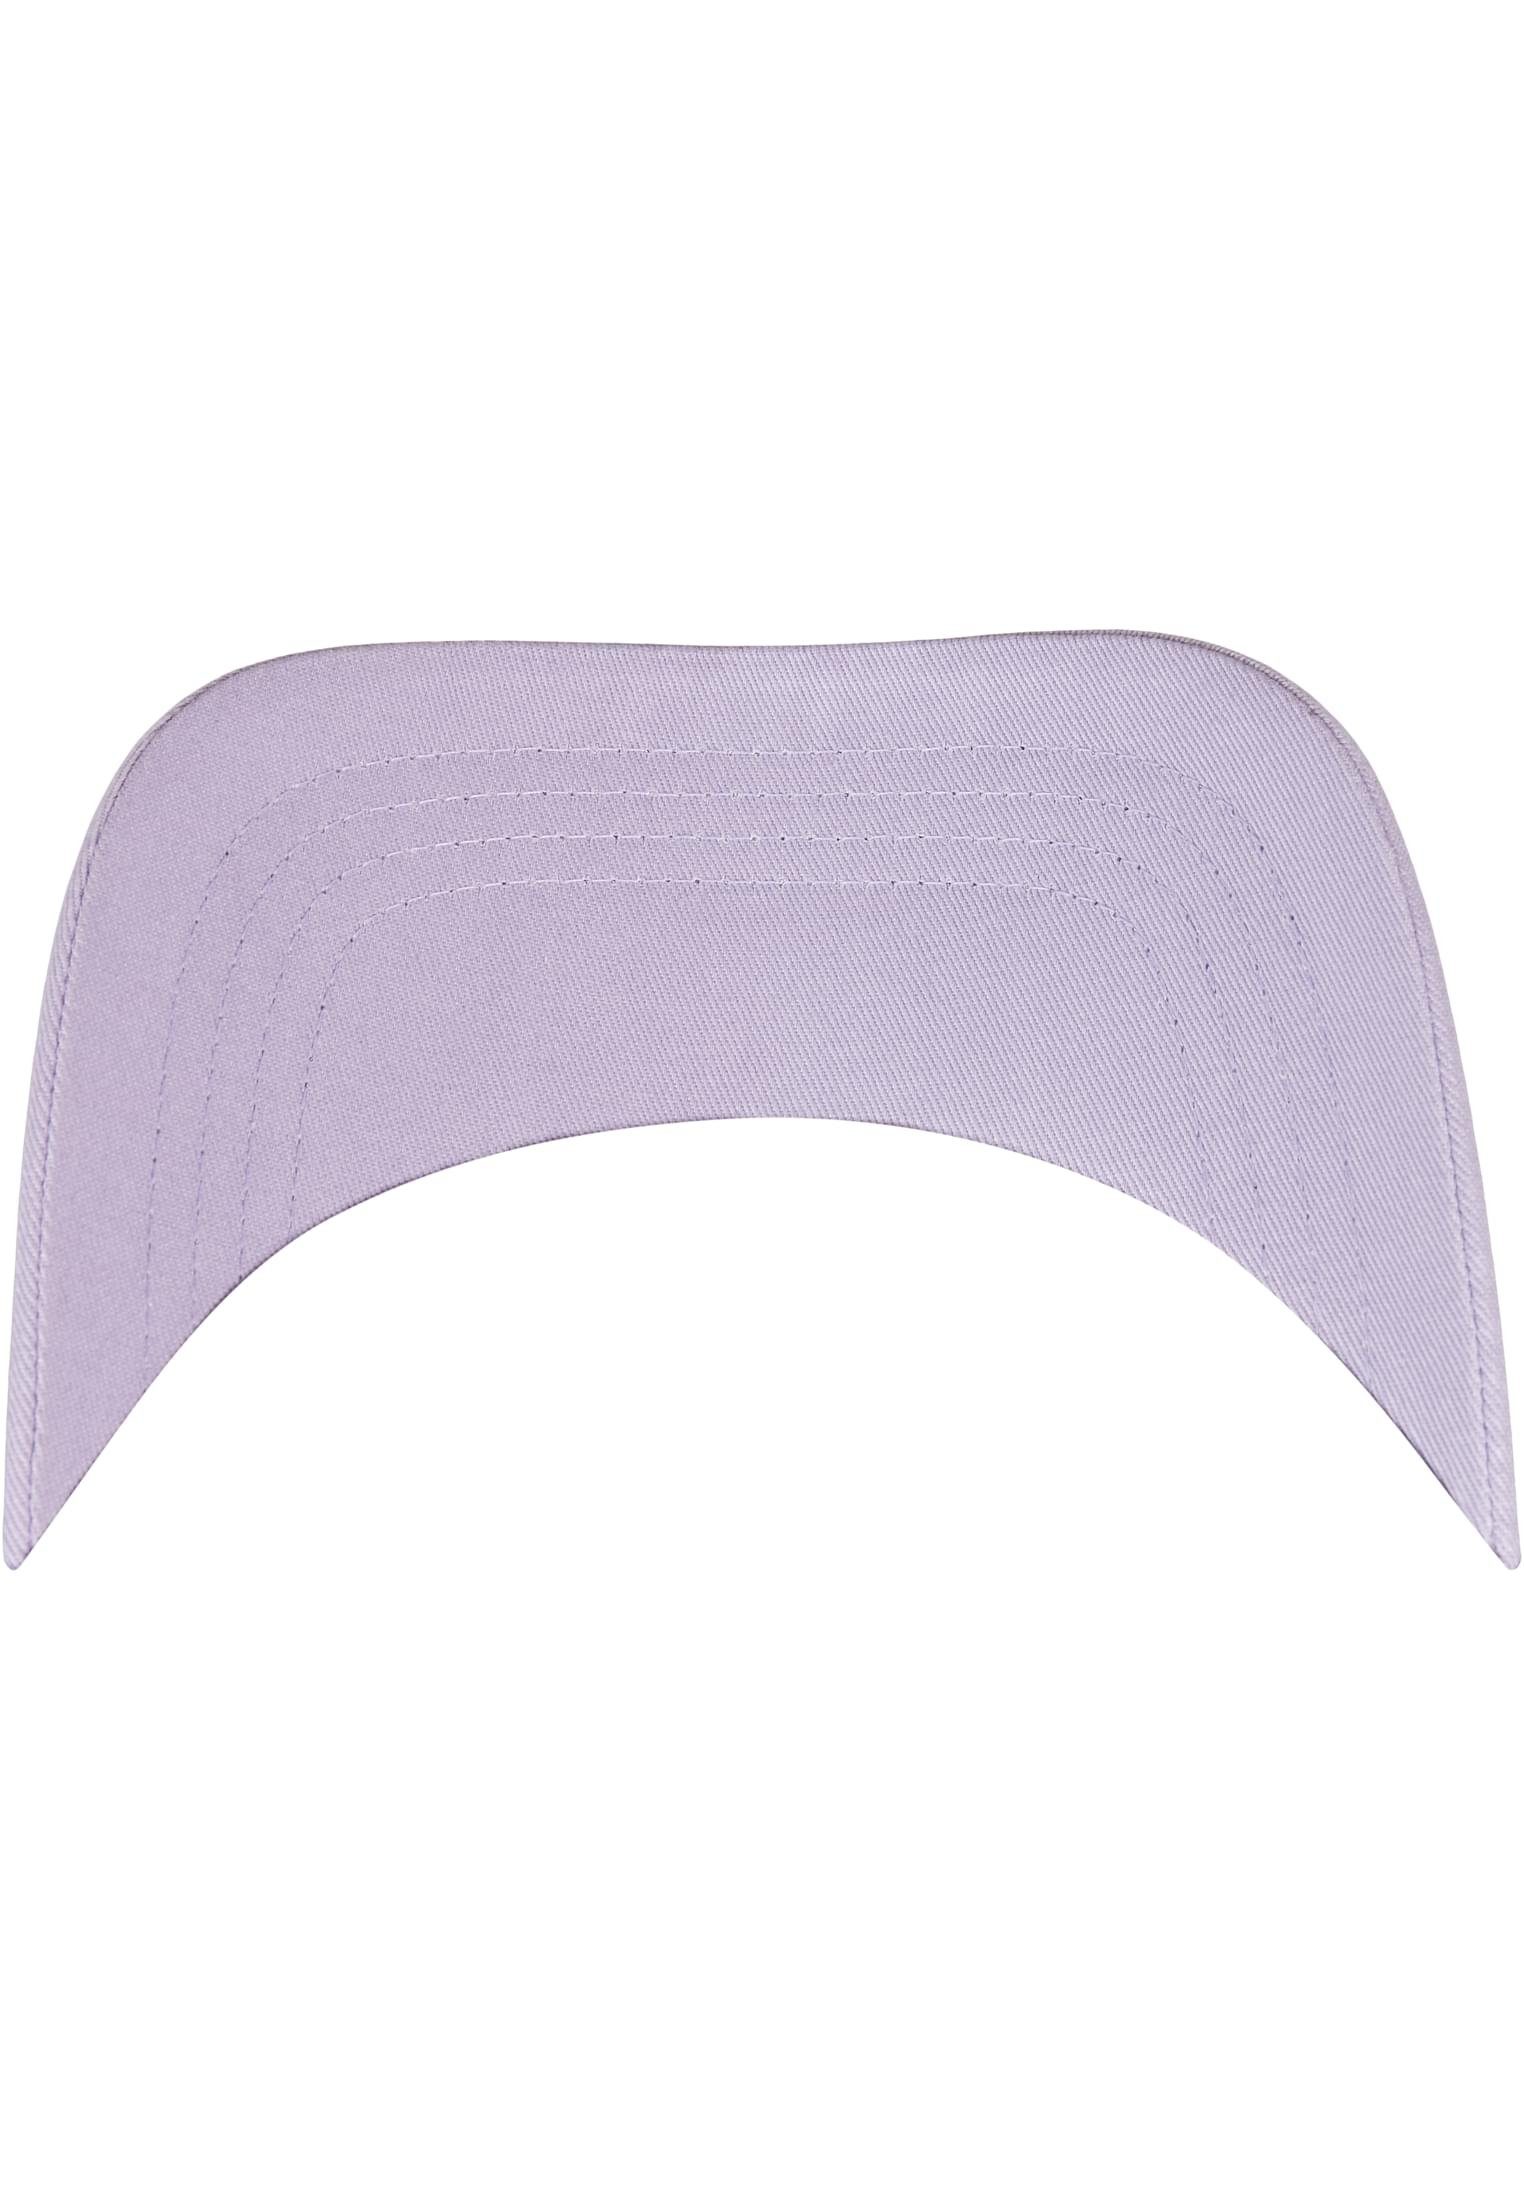 Flexfit Flex Accessoires Cap Visor Curved lilac Cap